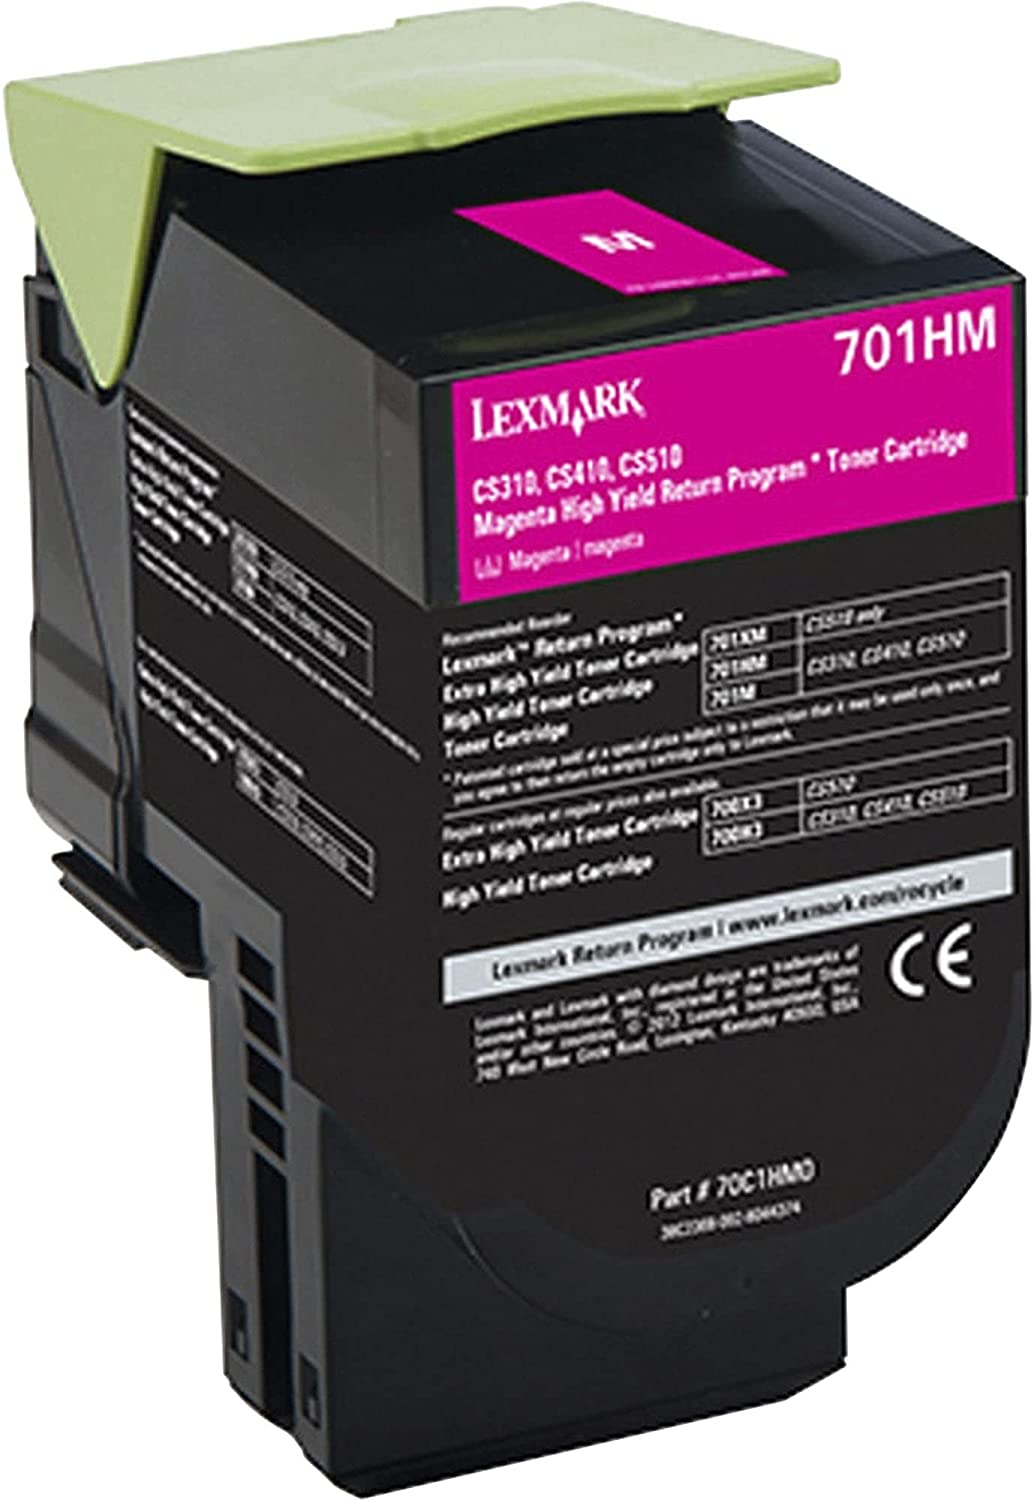 Lexmark, LEX70C1HM0, 70C1H Toner Cartridge, 1 Each, Magenta (701HM)